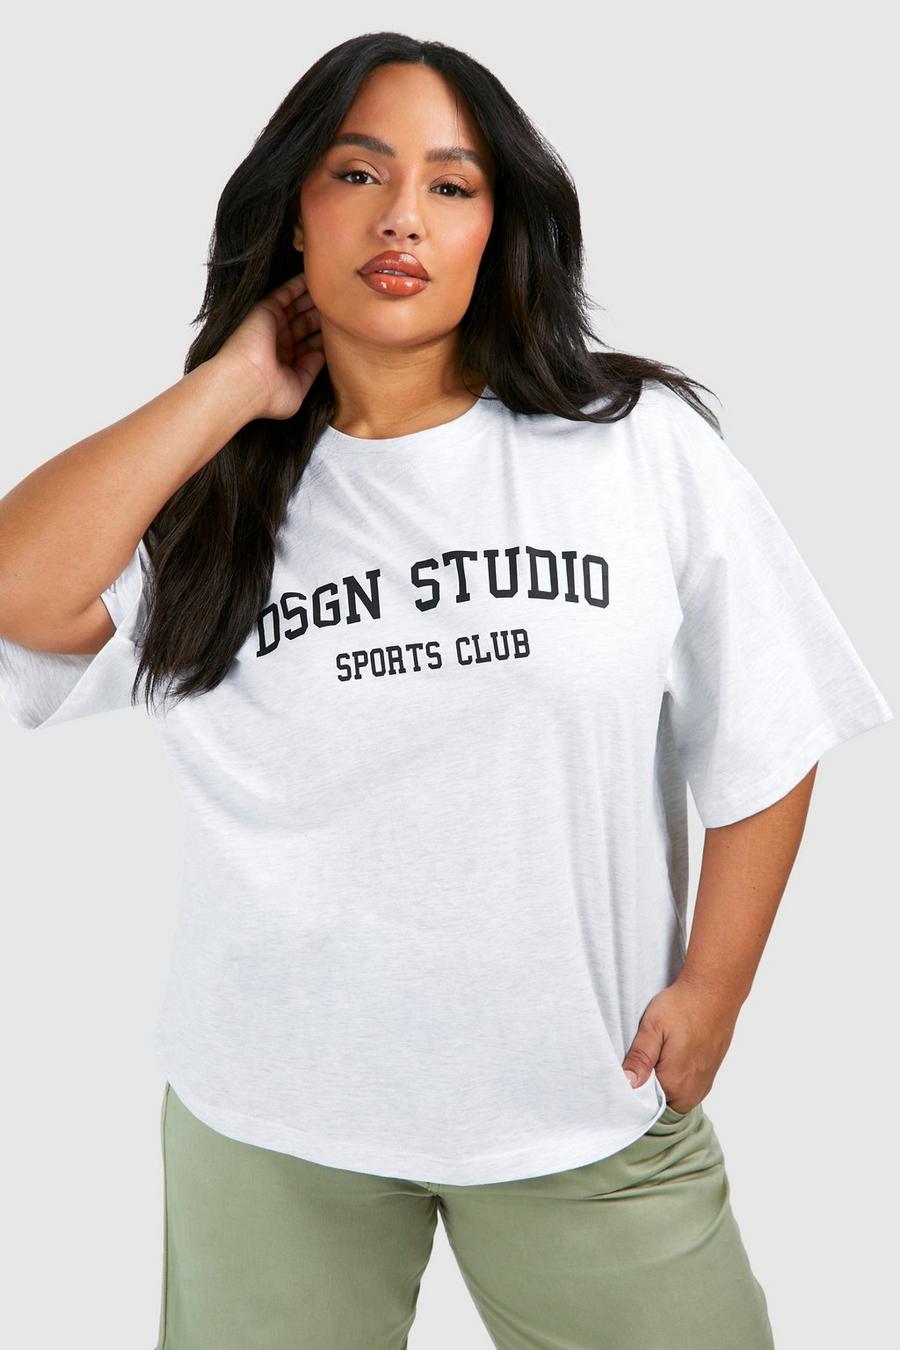 T-shirt Plus Size oversize Dsgn Studio Sports Club, Ash grey image number 1